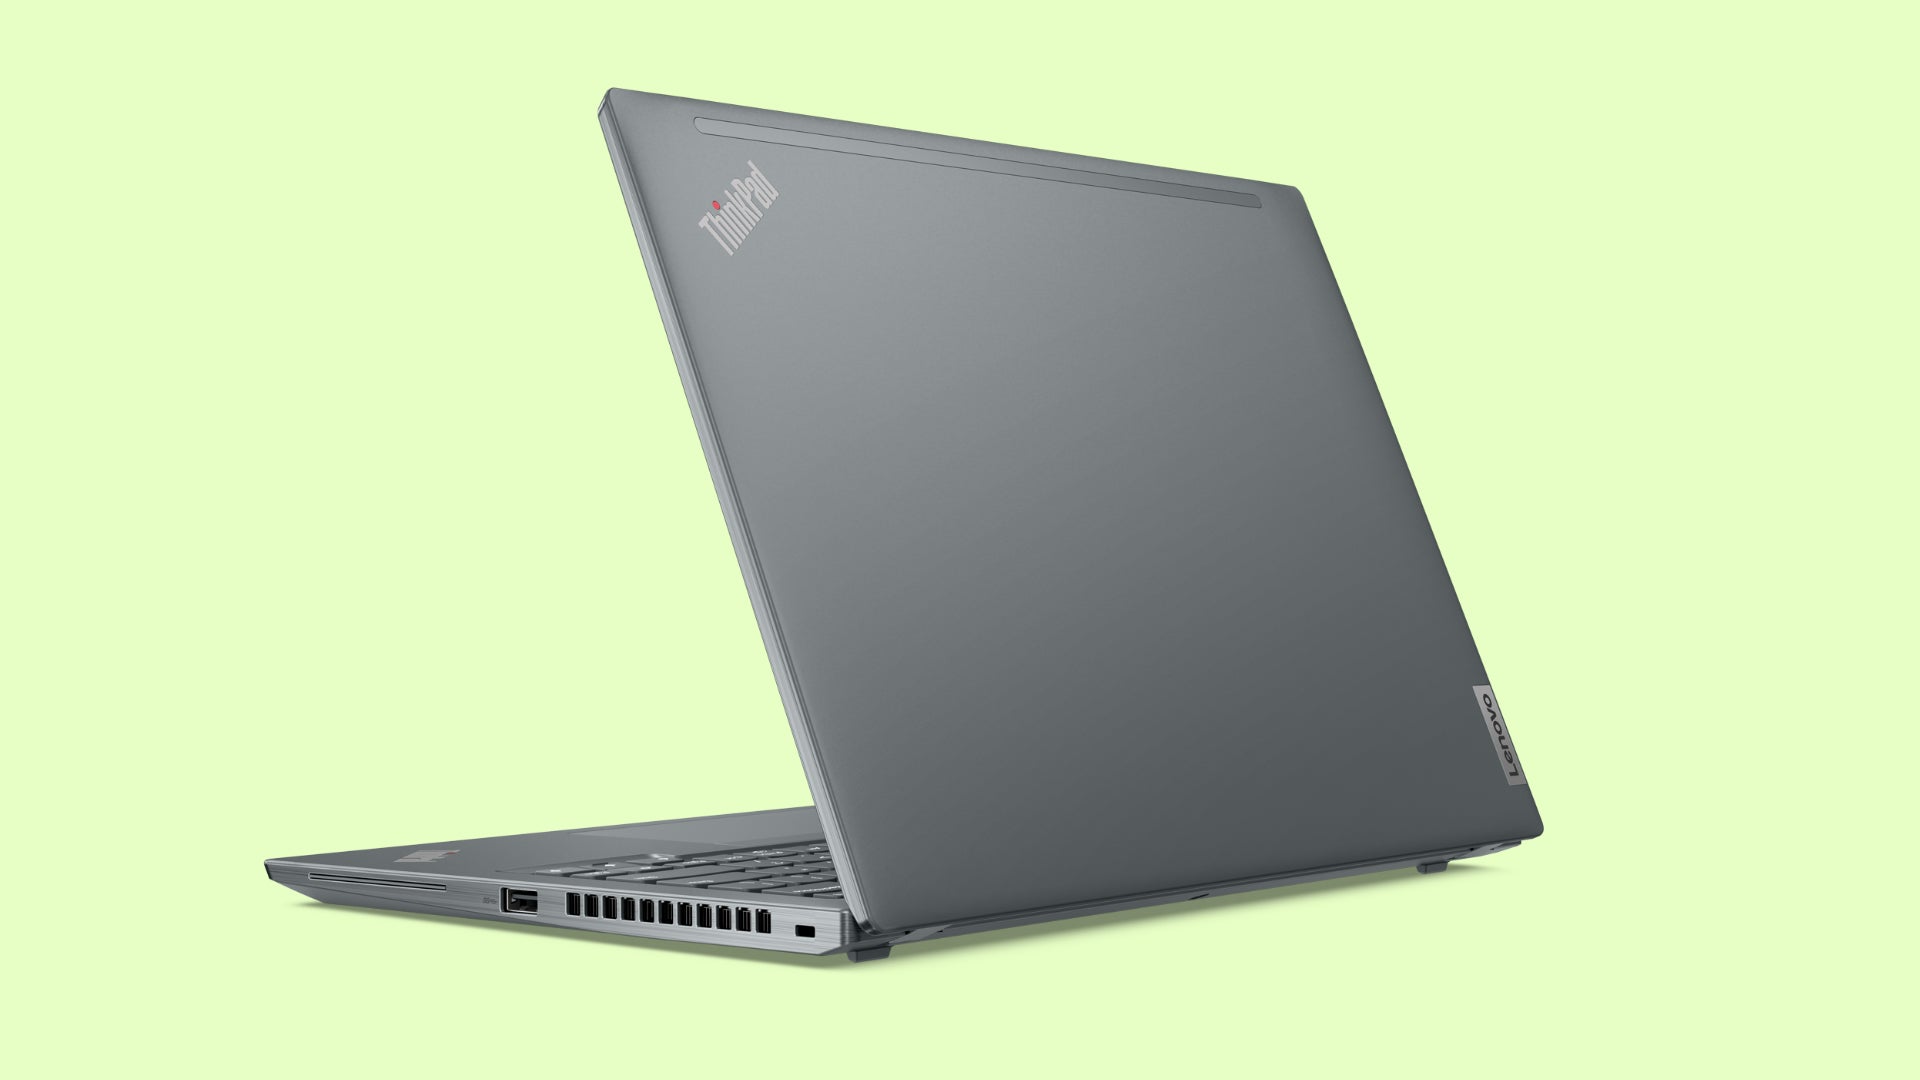 Lenovo ThinkPad X13 (Image: Lenovo)